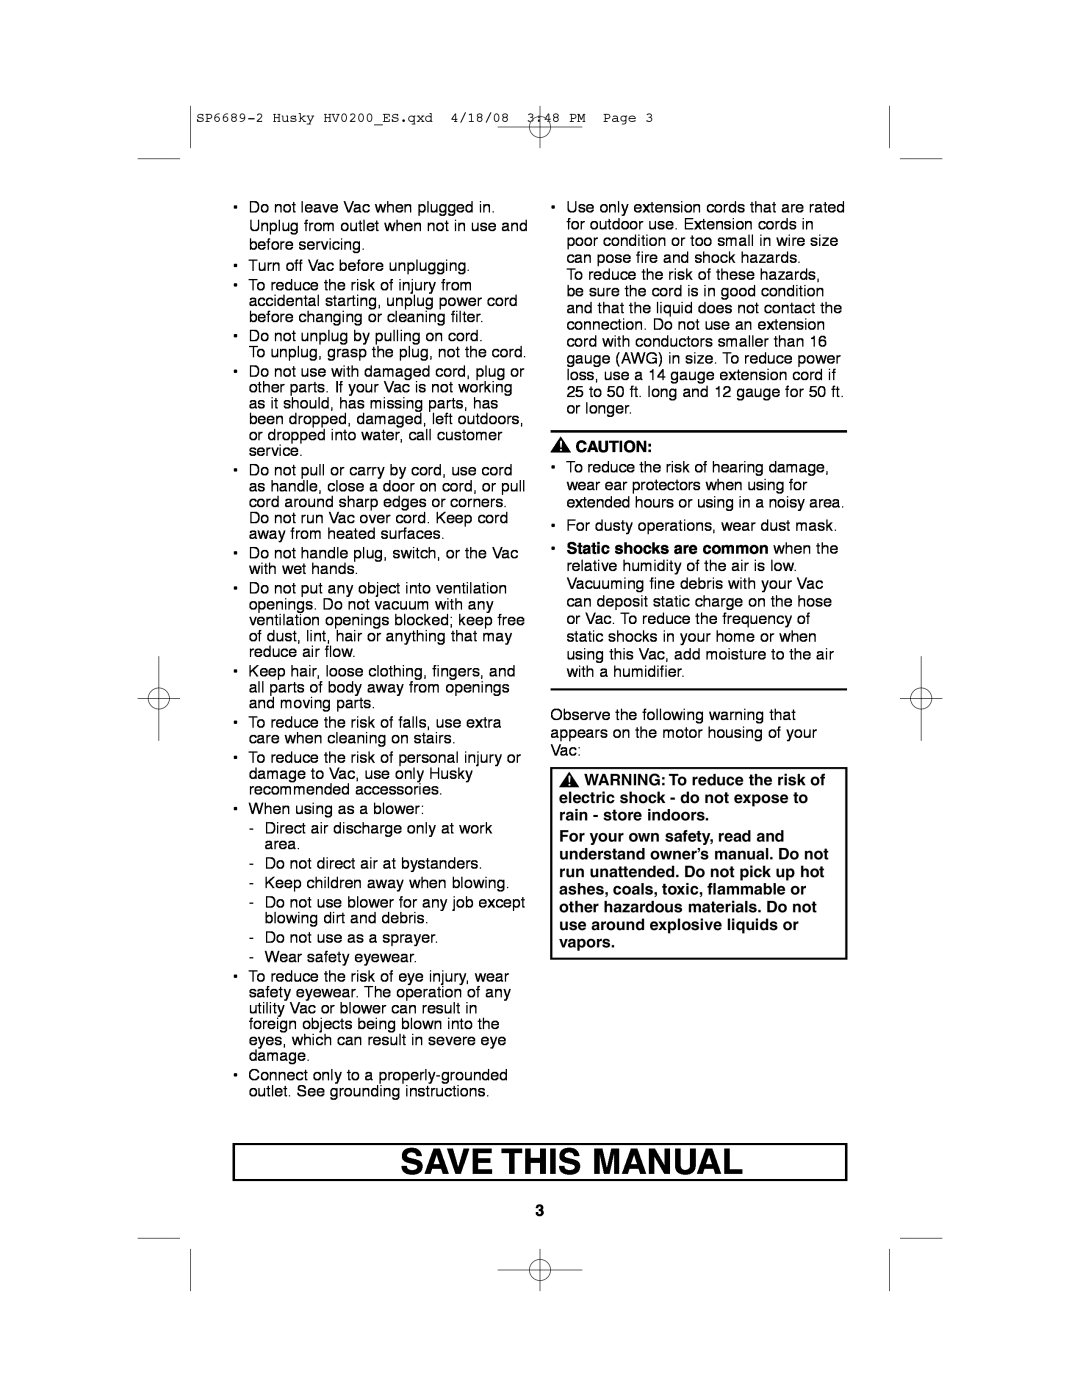 Husky HV02000 manual Save This Manual 